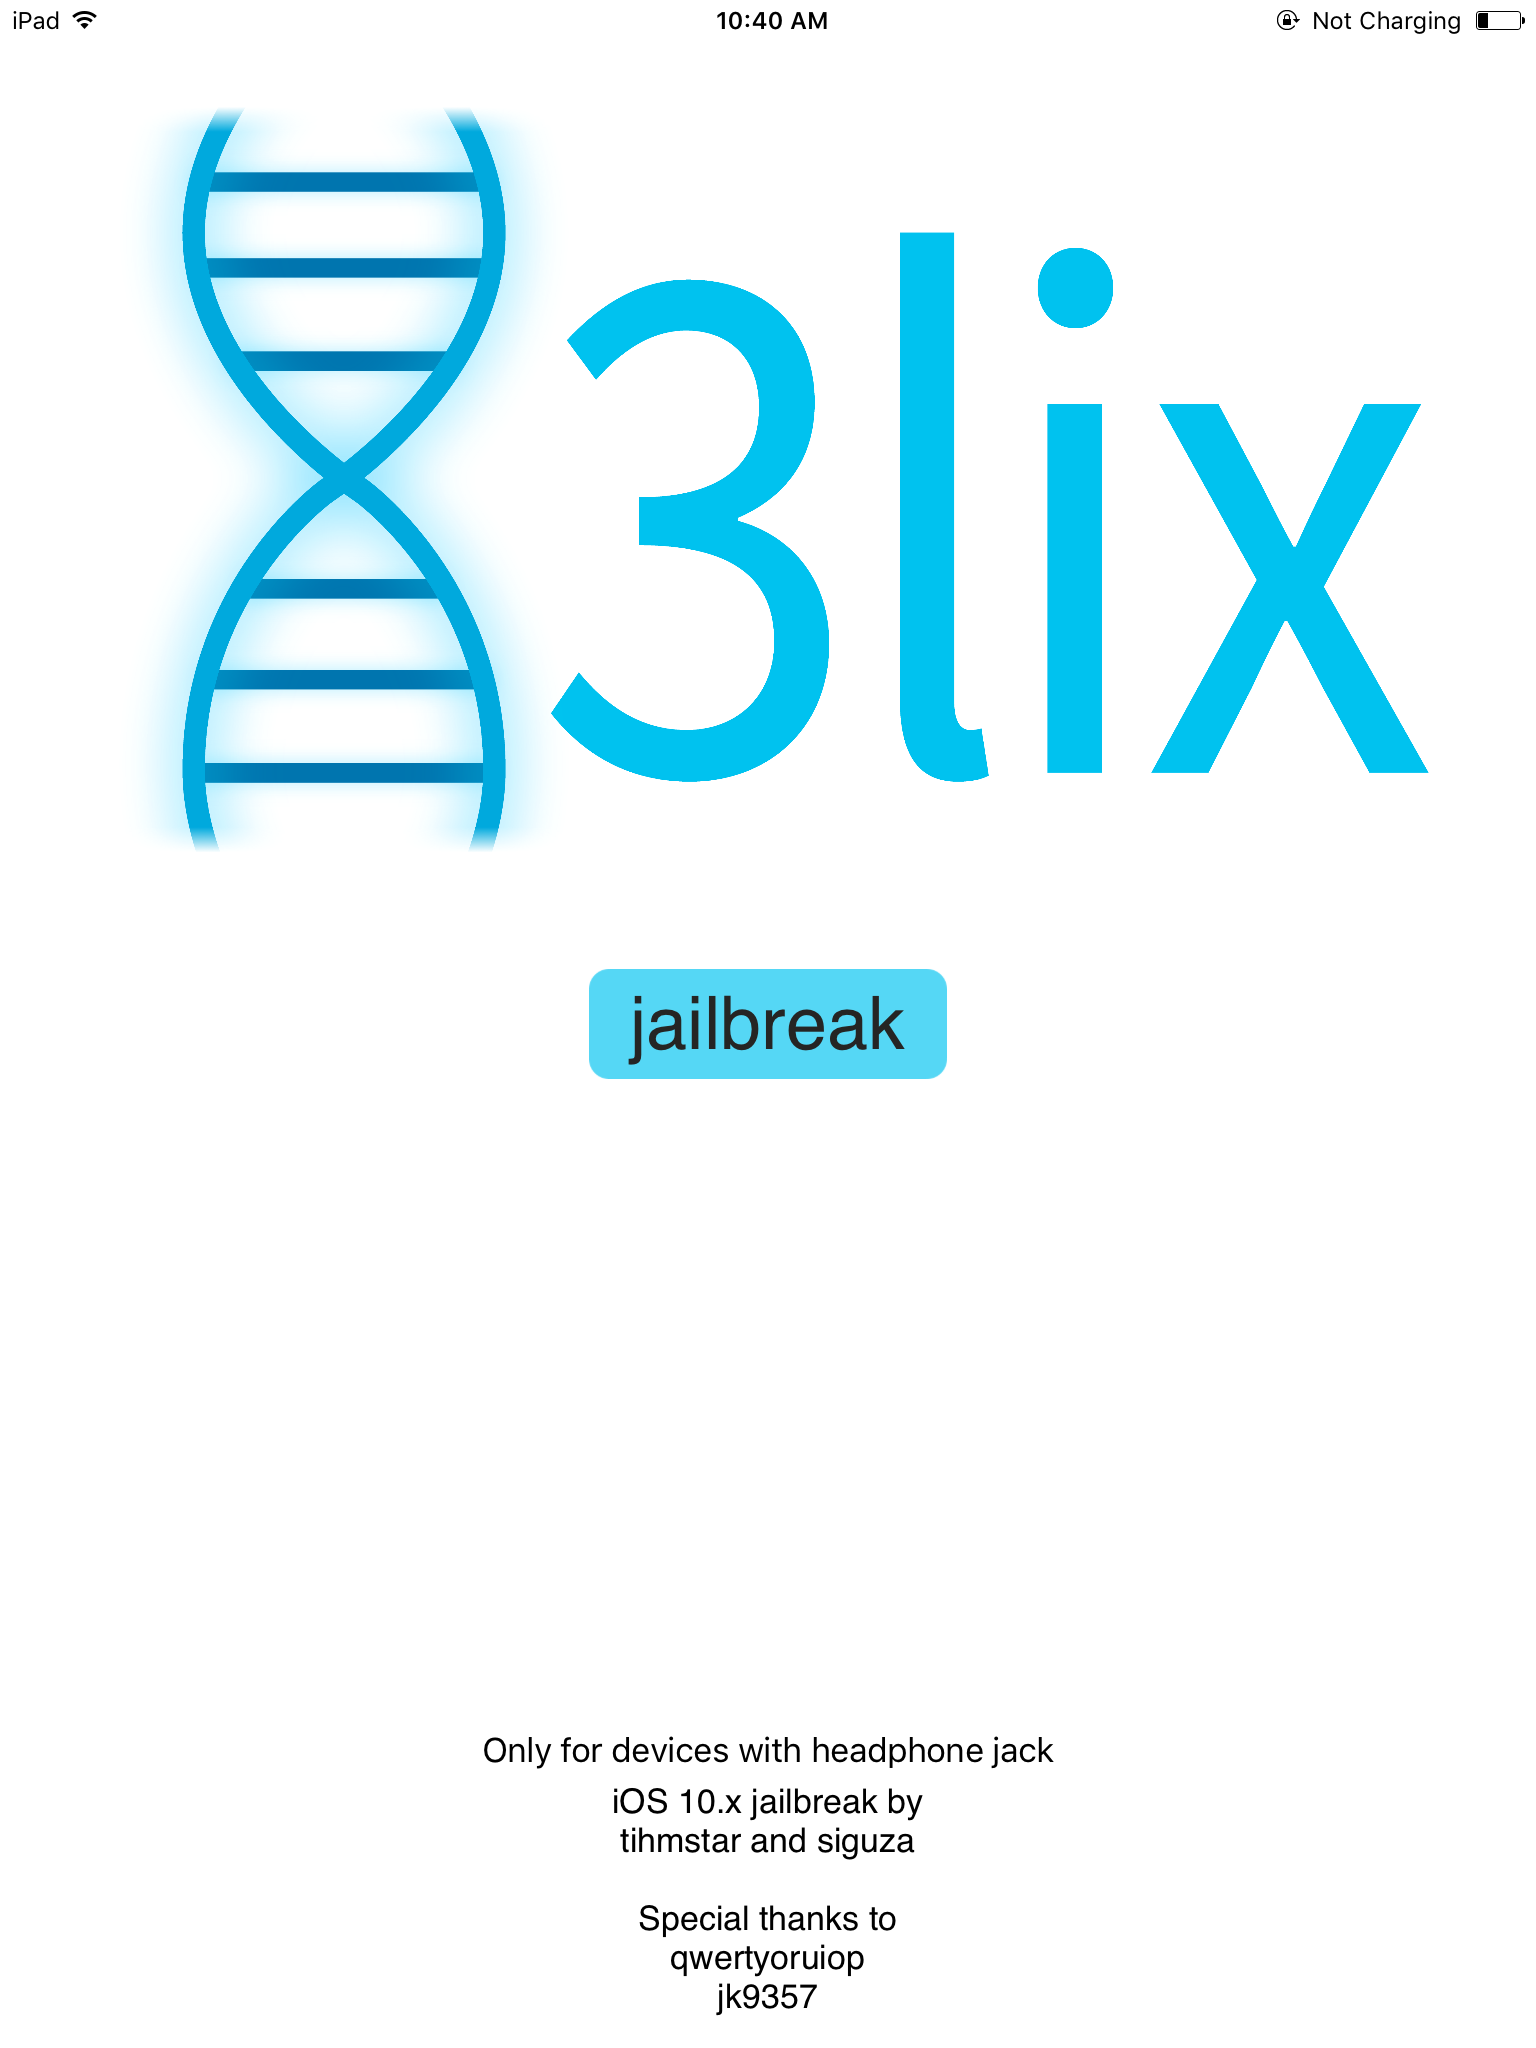 doubleH3lix for iOS 10 - 10.3.3 64-bit Jailbreak with Cydia